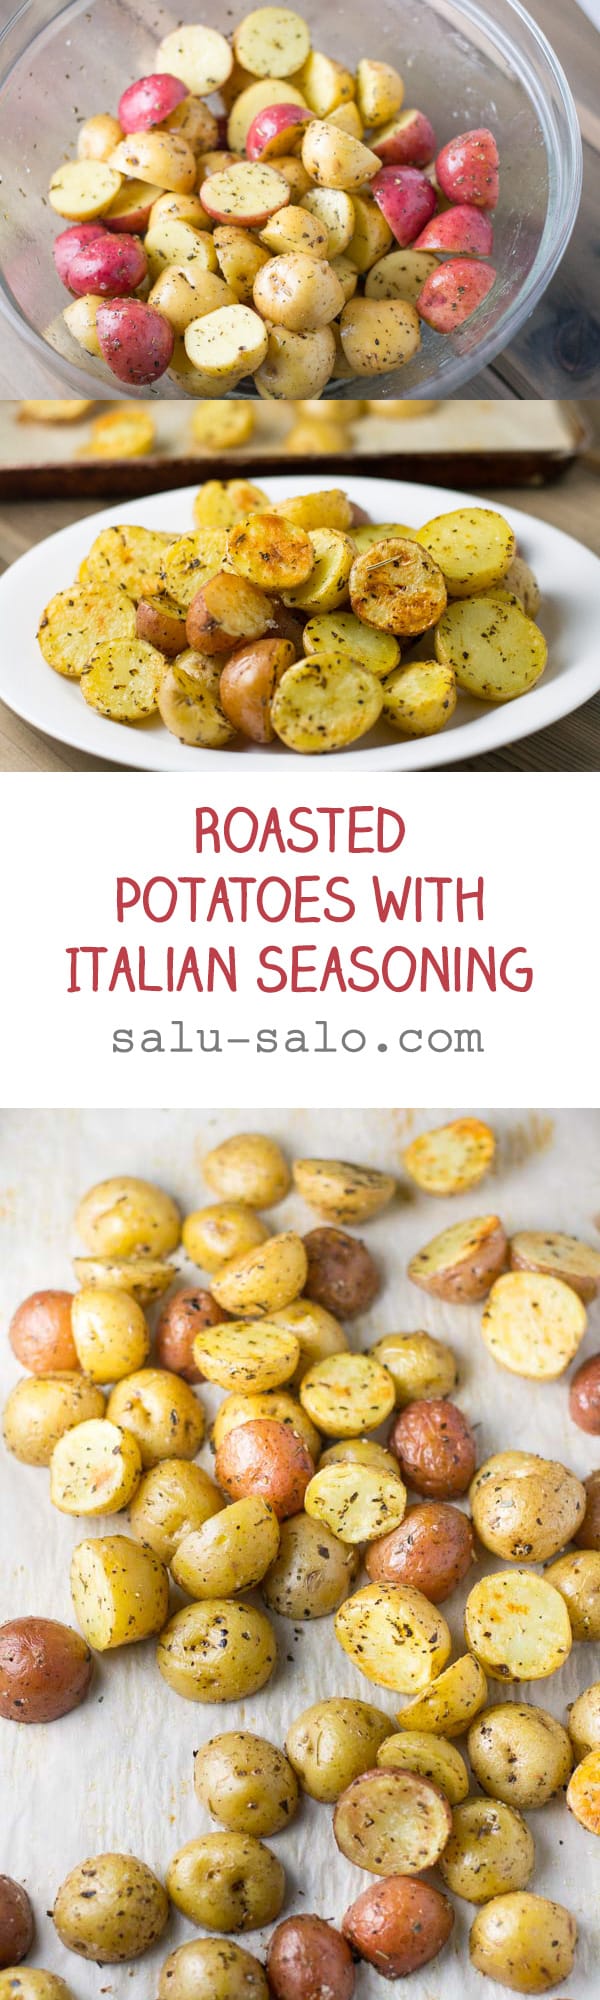 https://salu-salo.com/wp-content/uploads/2016/03/Roasted-Potatoes-with-Italian-Seasoning.jpg